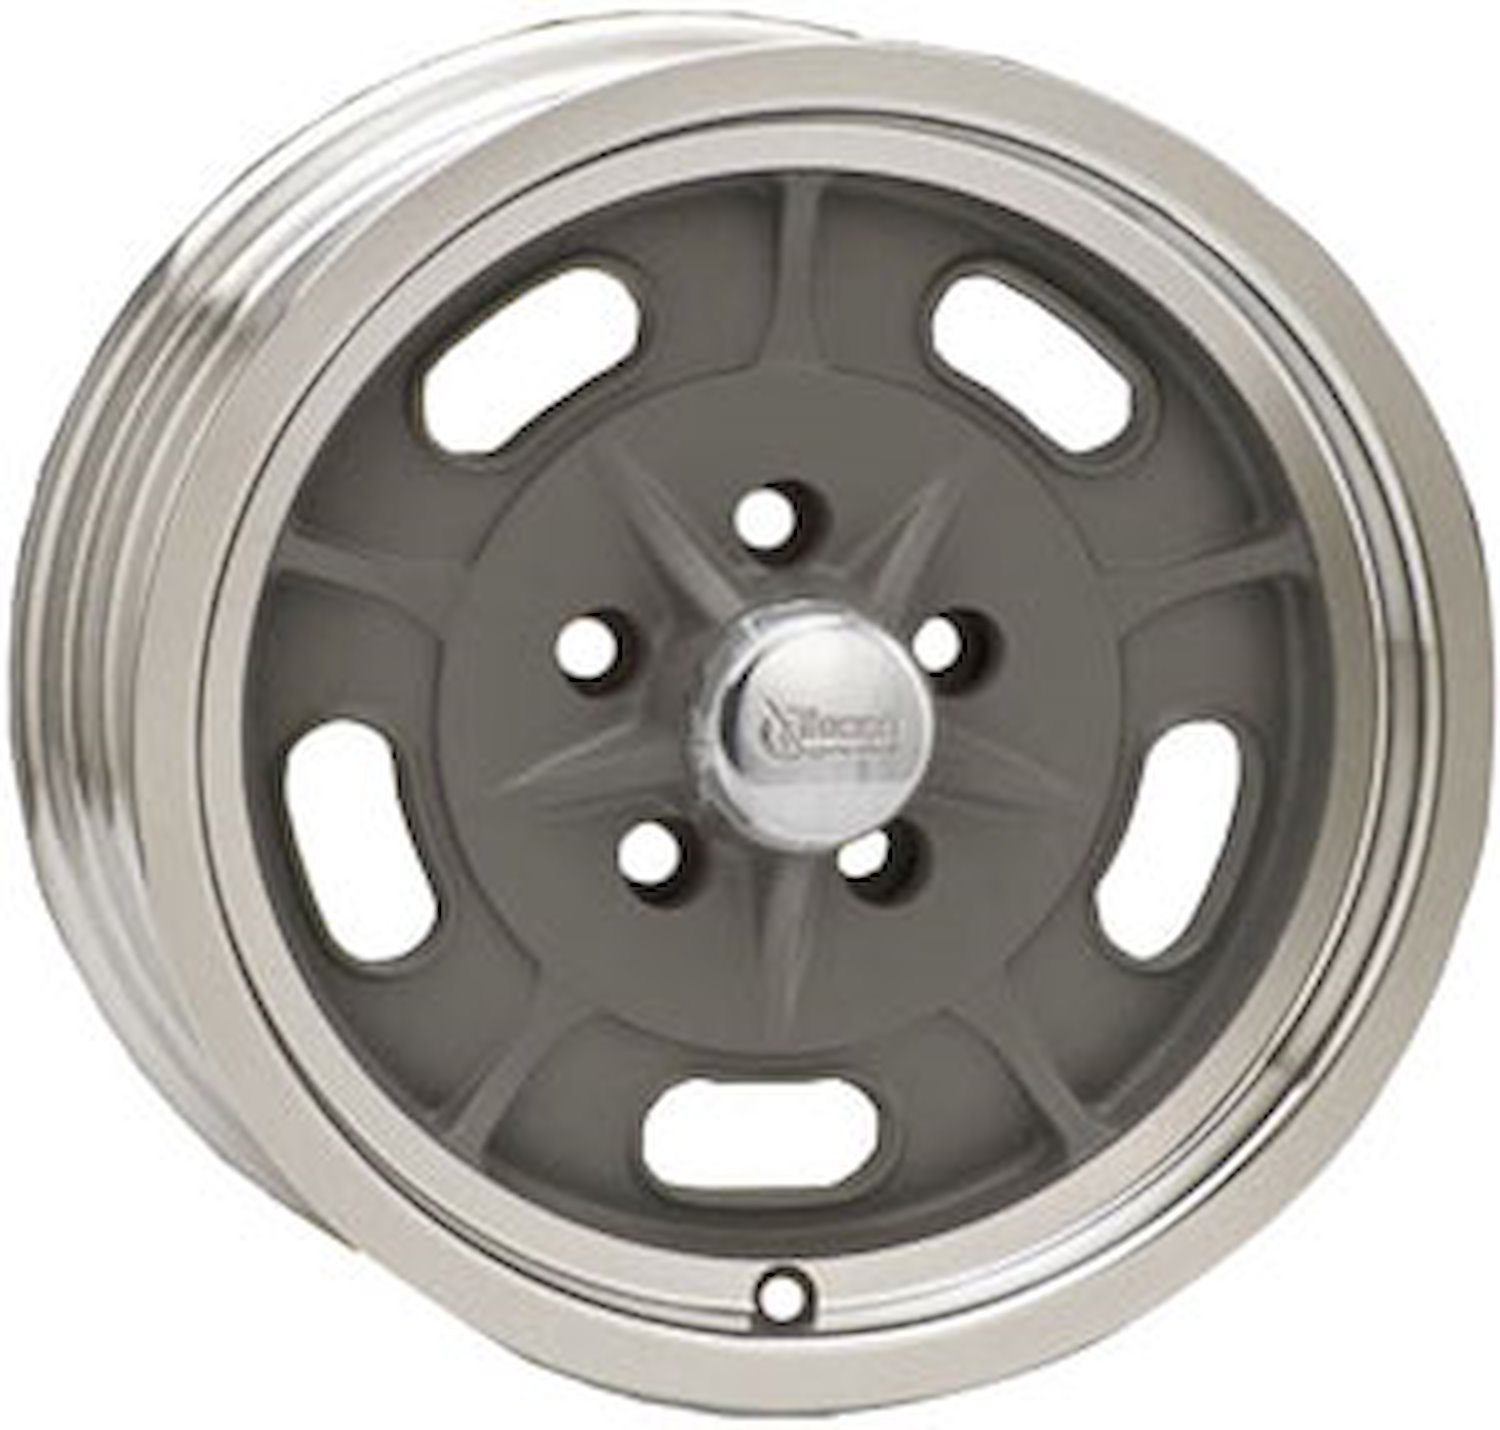 Igniter Wheel - Gray Size: 15" x 6"